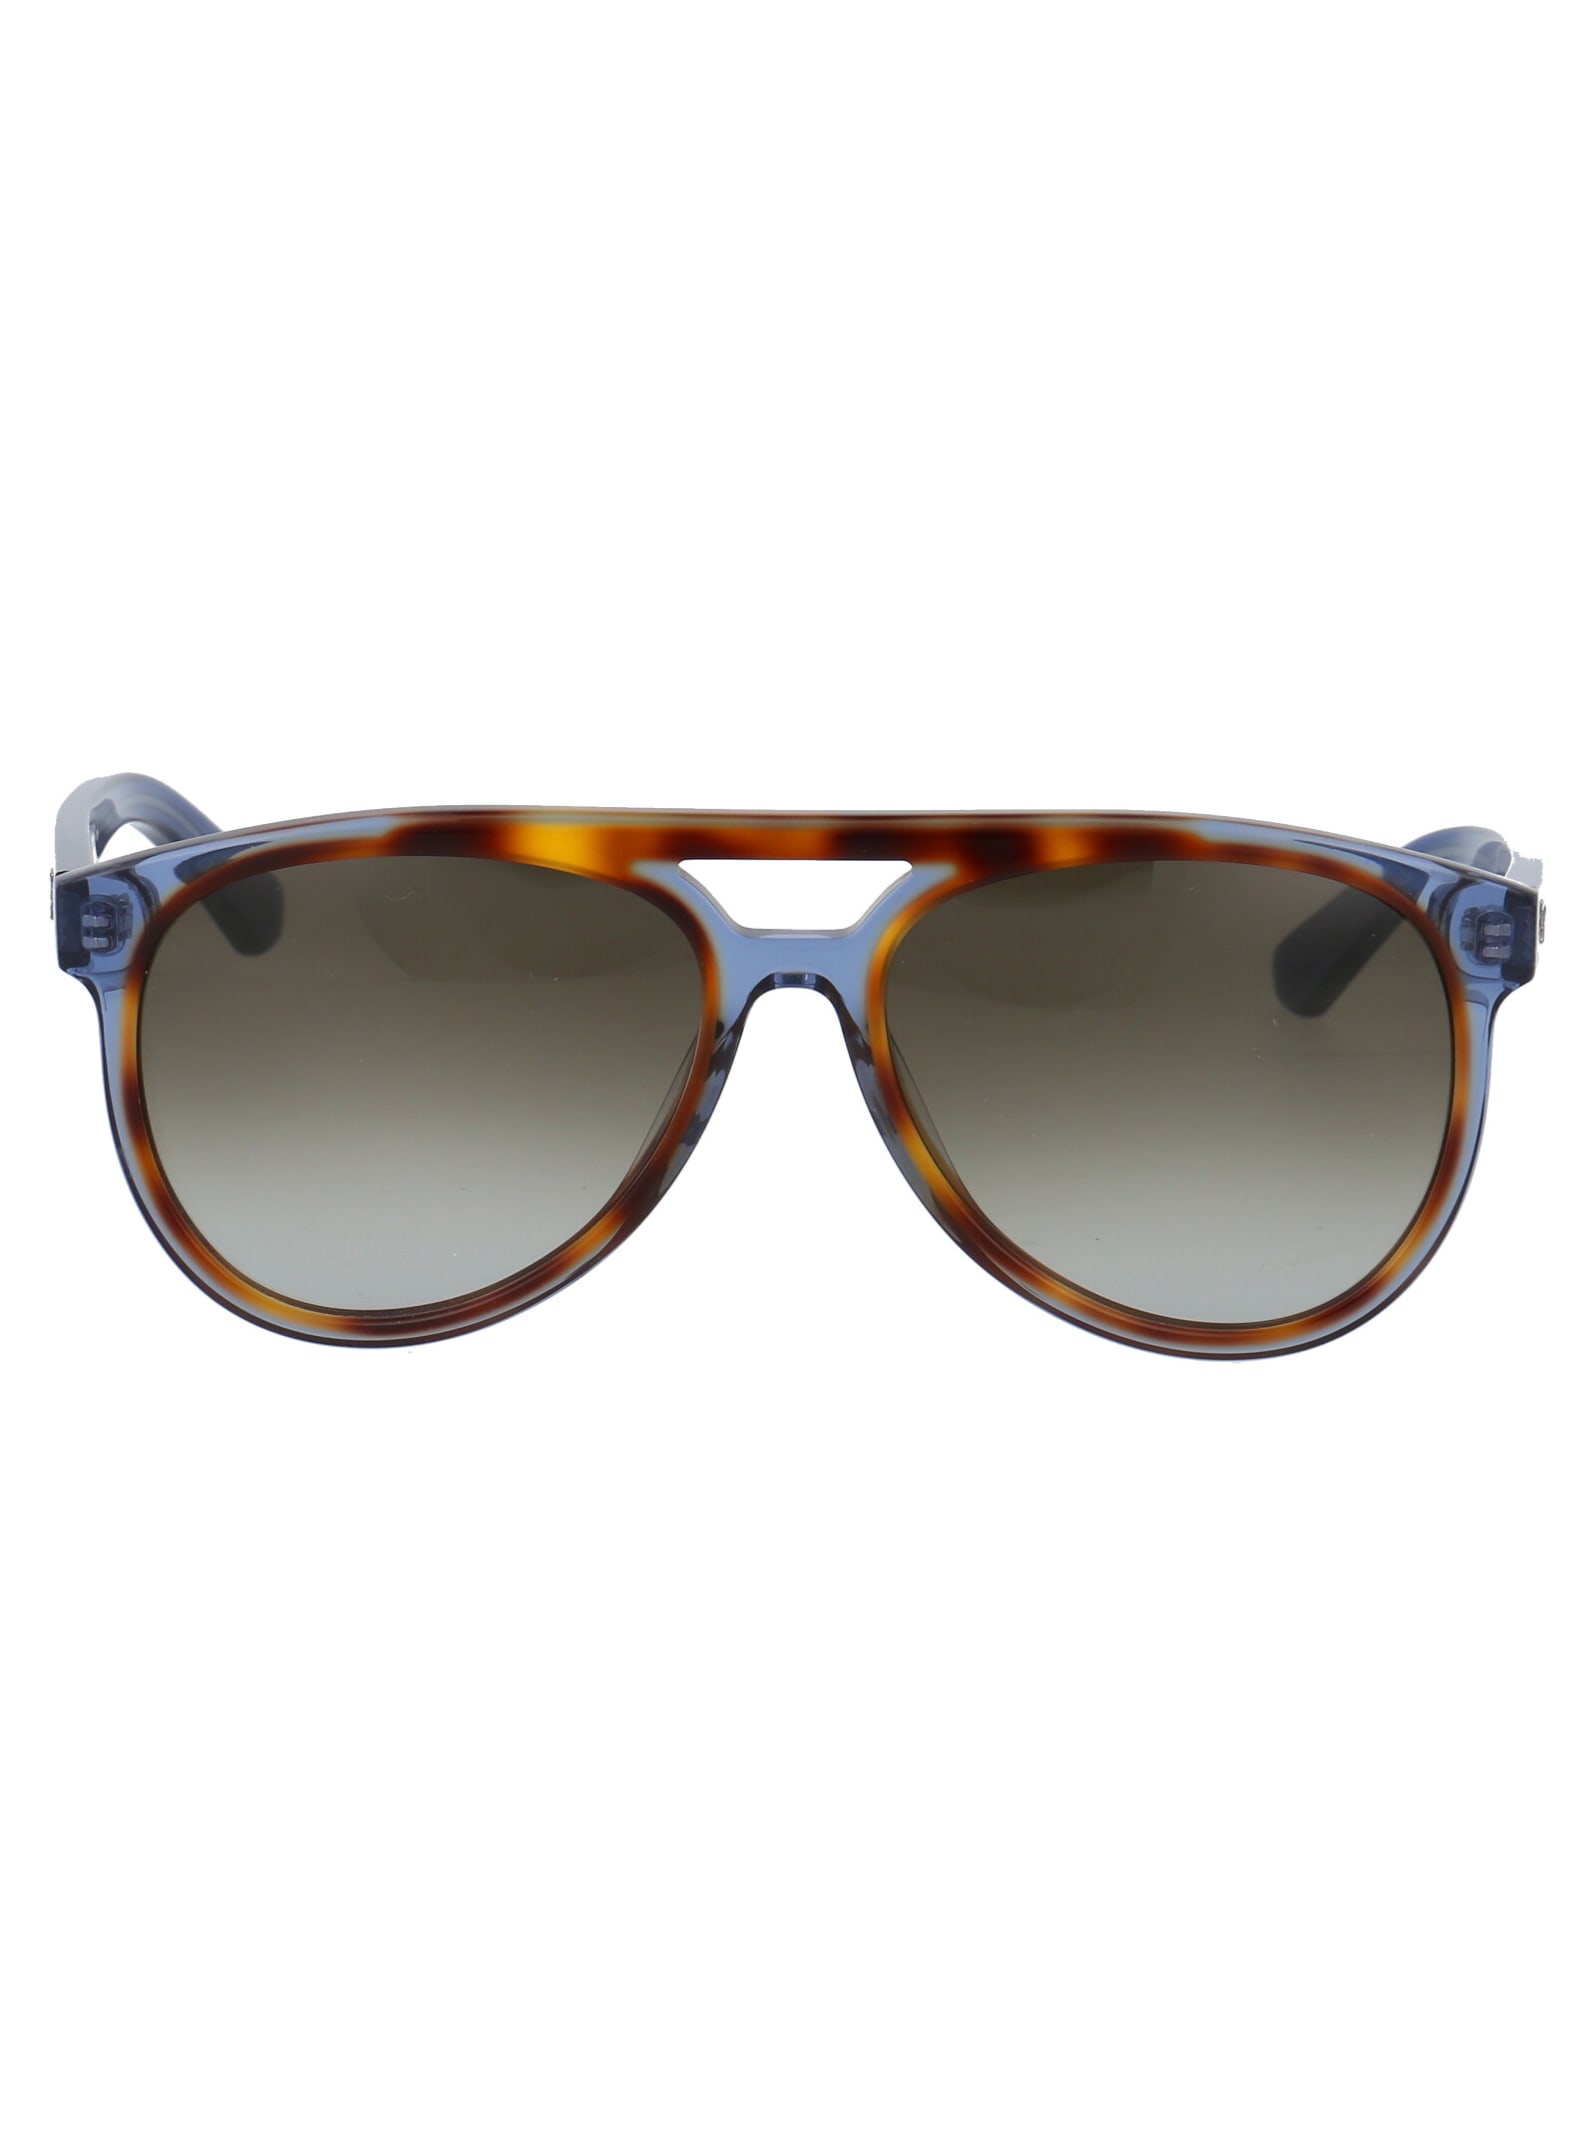 Salvatore Ferragamo Eyewear Sf945s Sunglasses